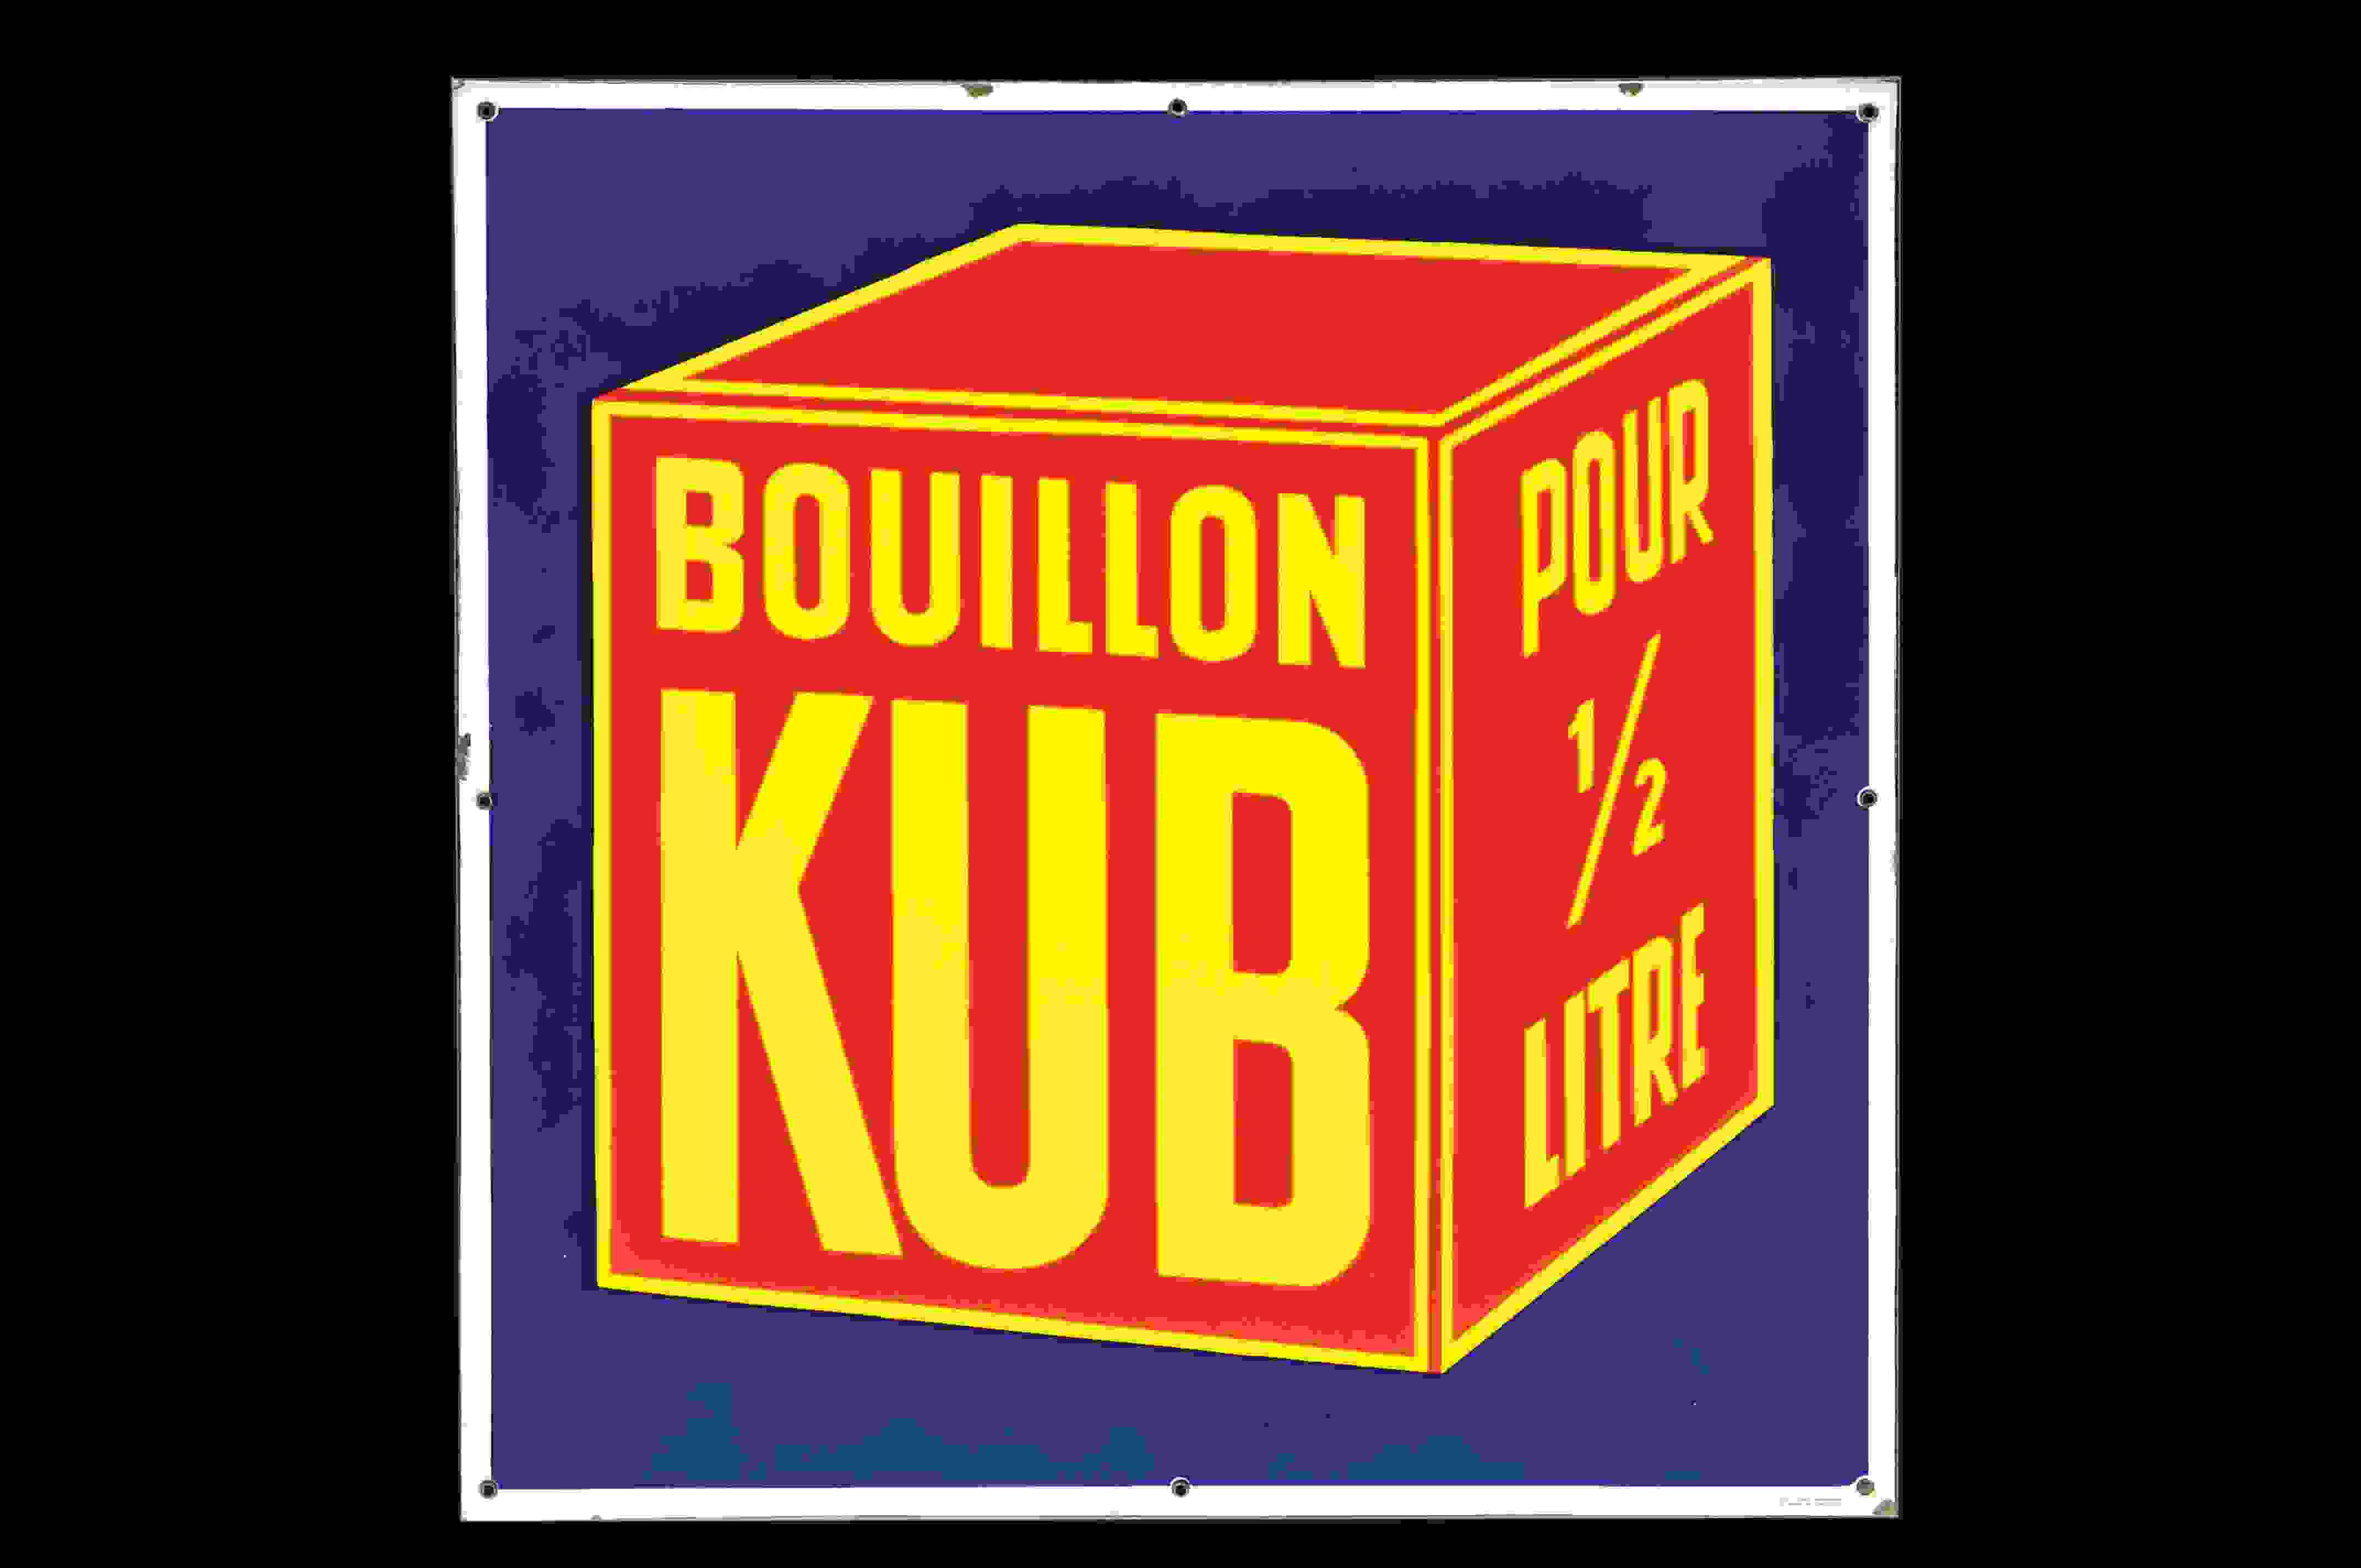 Bouillon Kub 